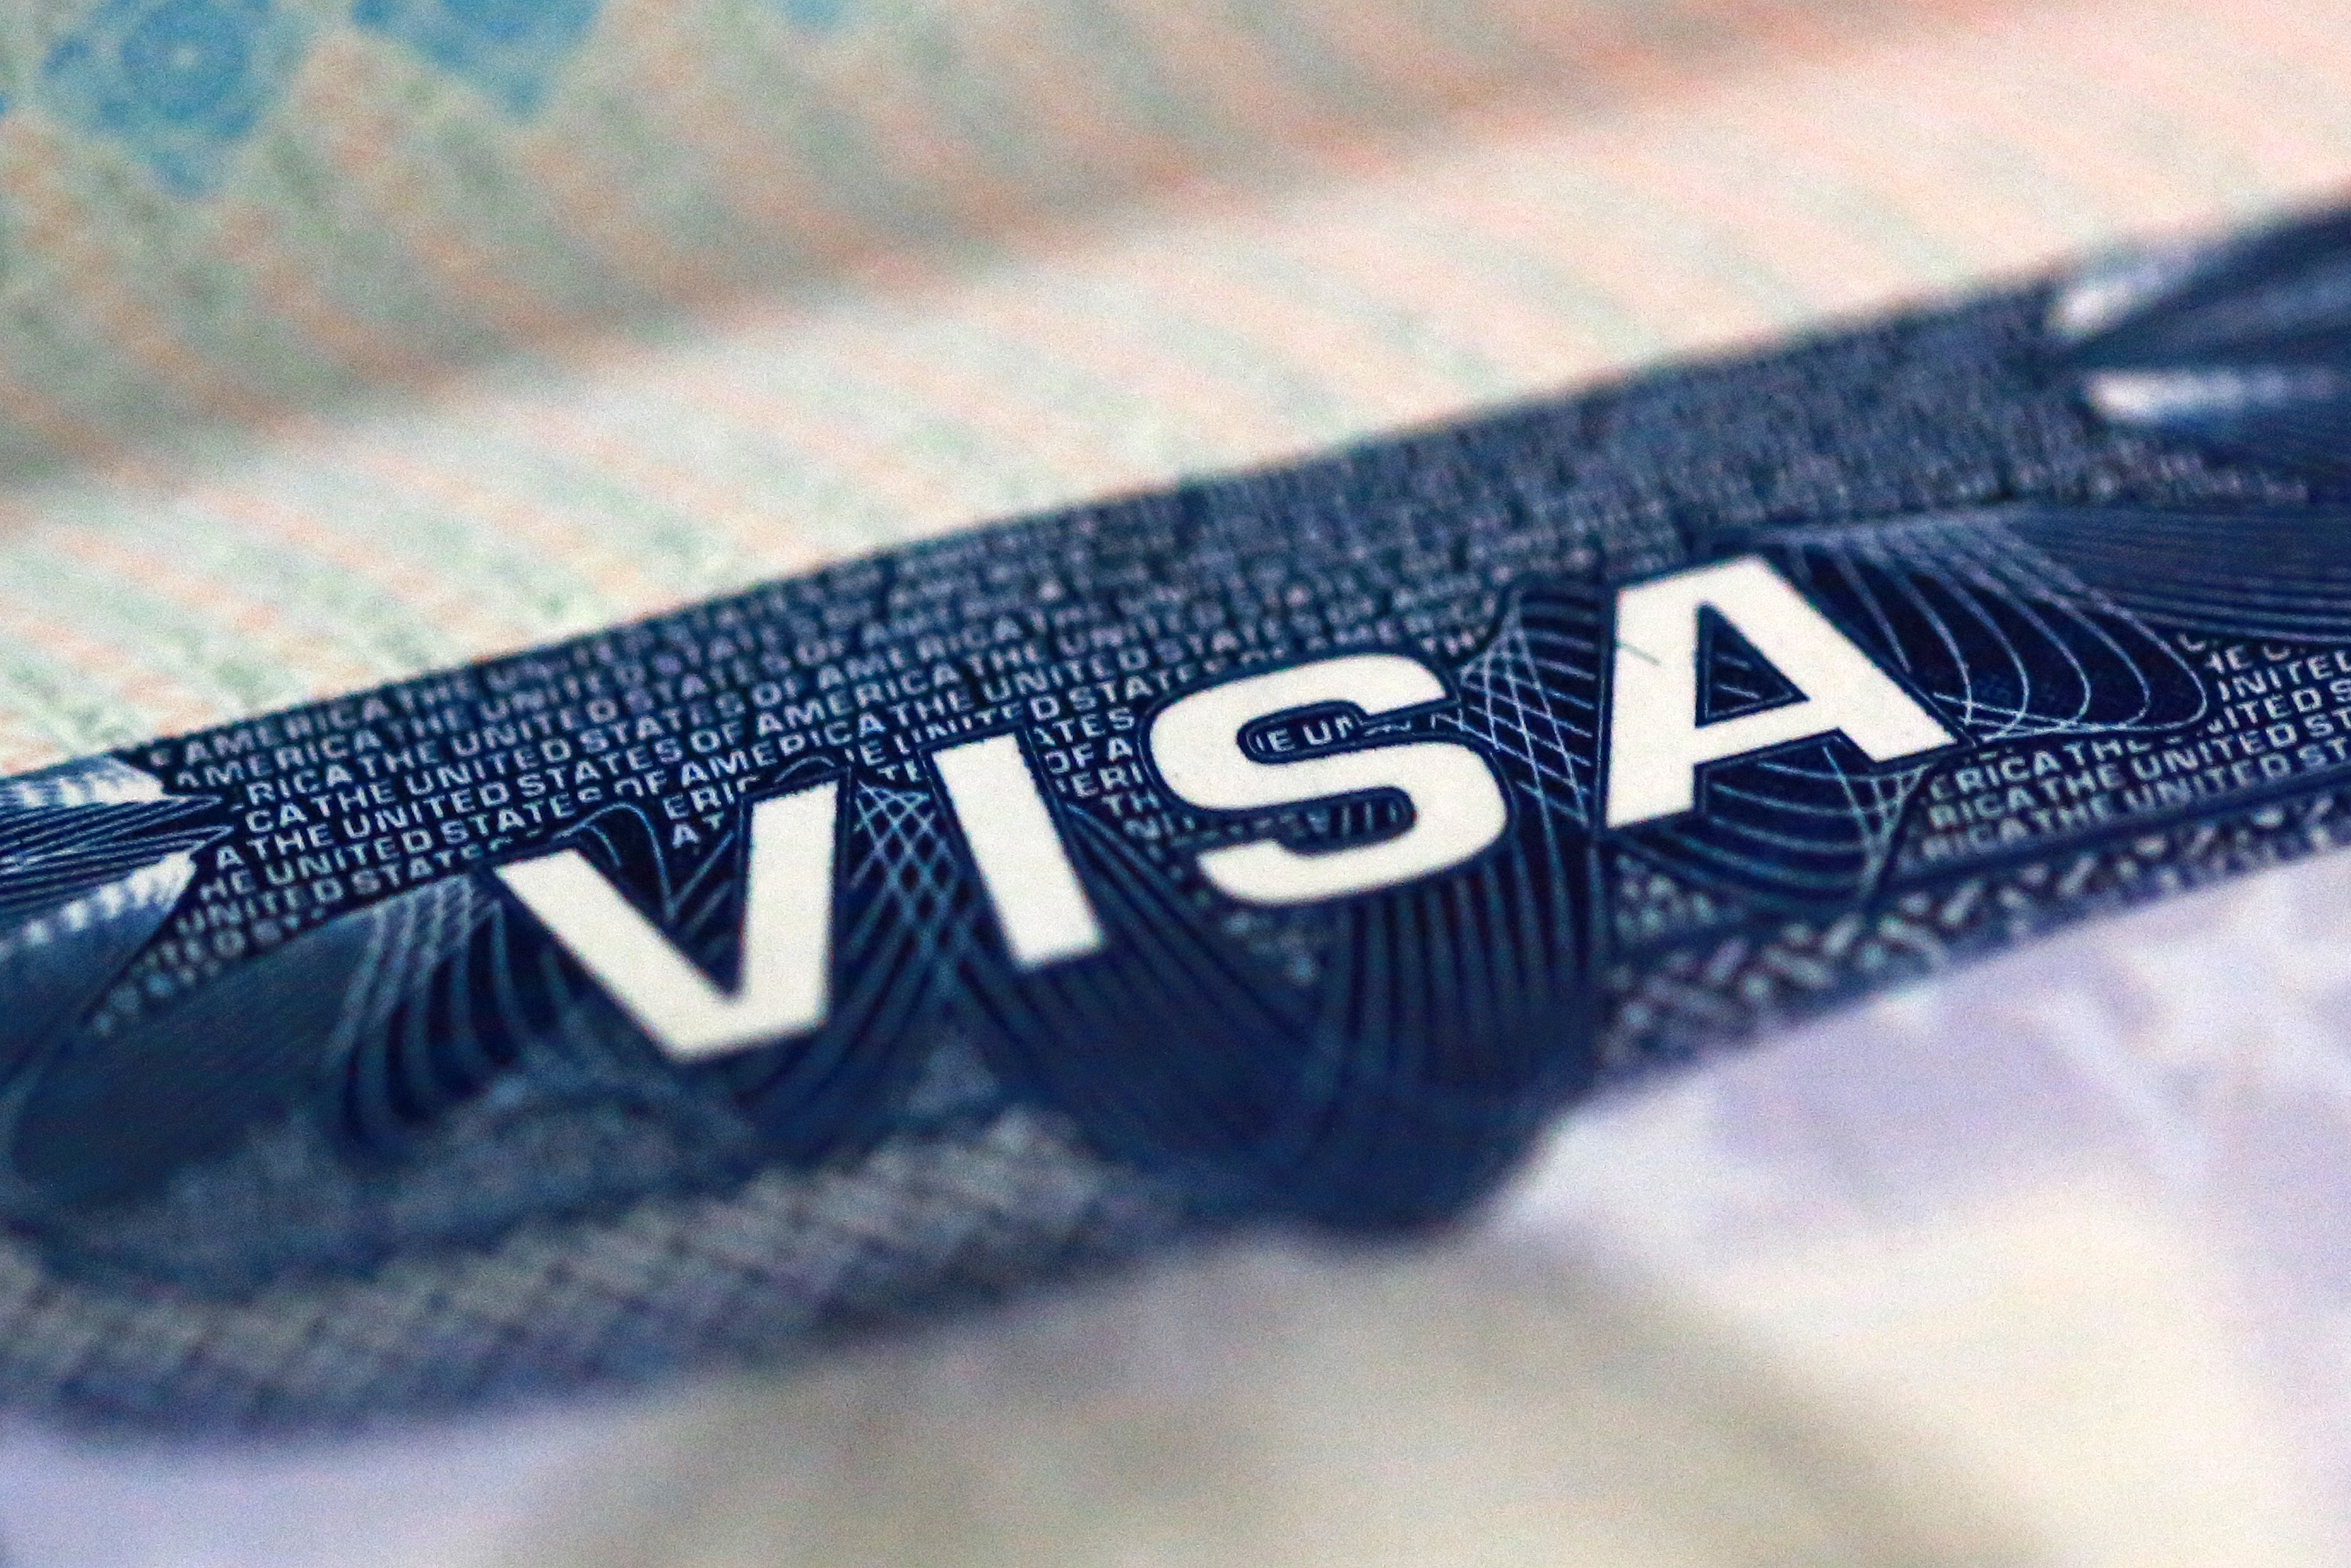 Visa appointment. Картинка для сайта о визах.